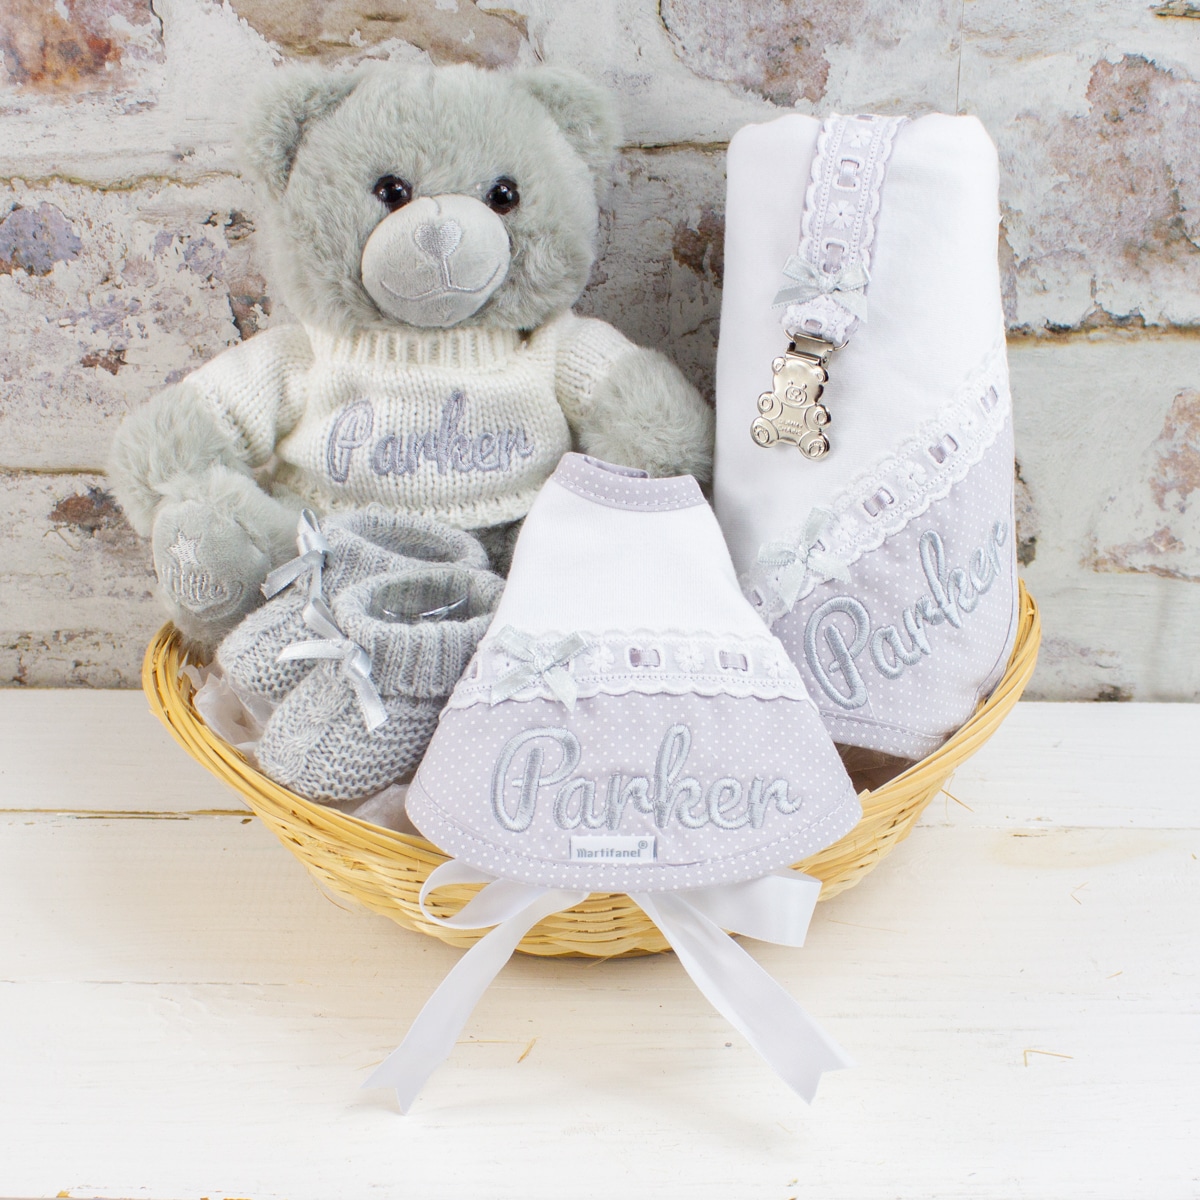 England Inspired babygrow /& Teddy Bear Personalised Matching Set Gift